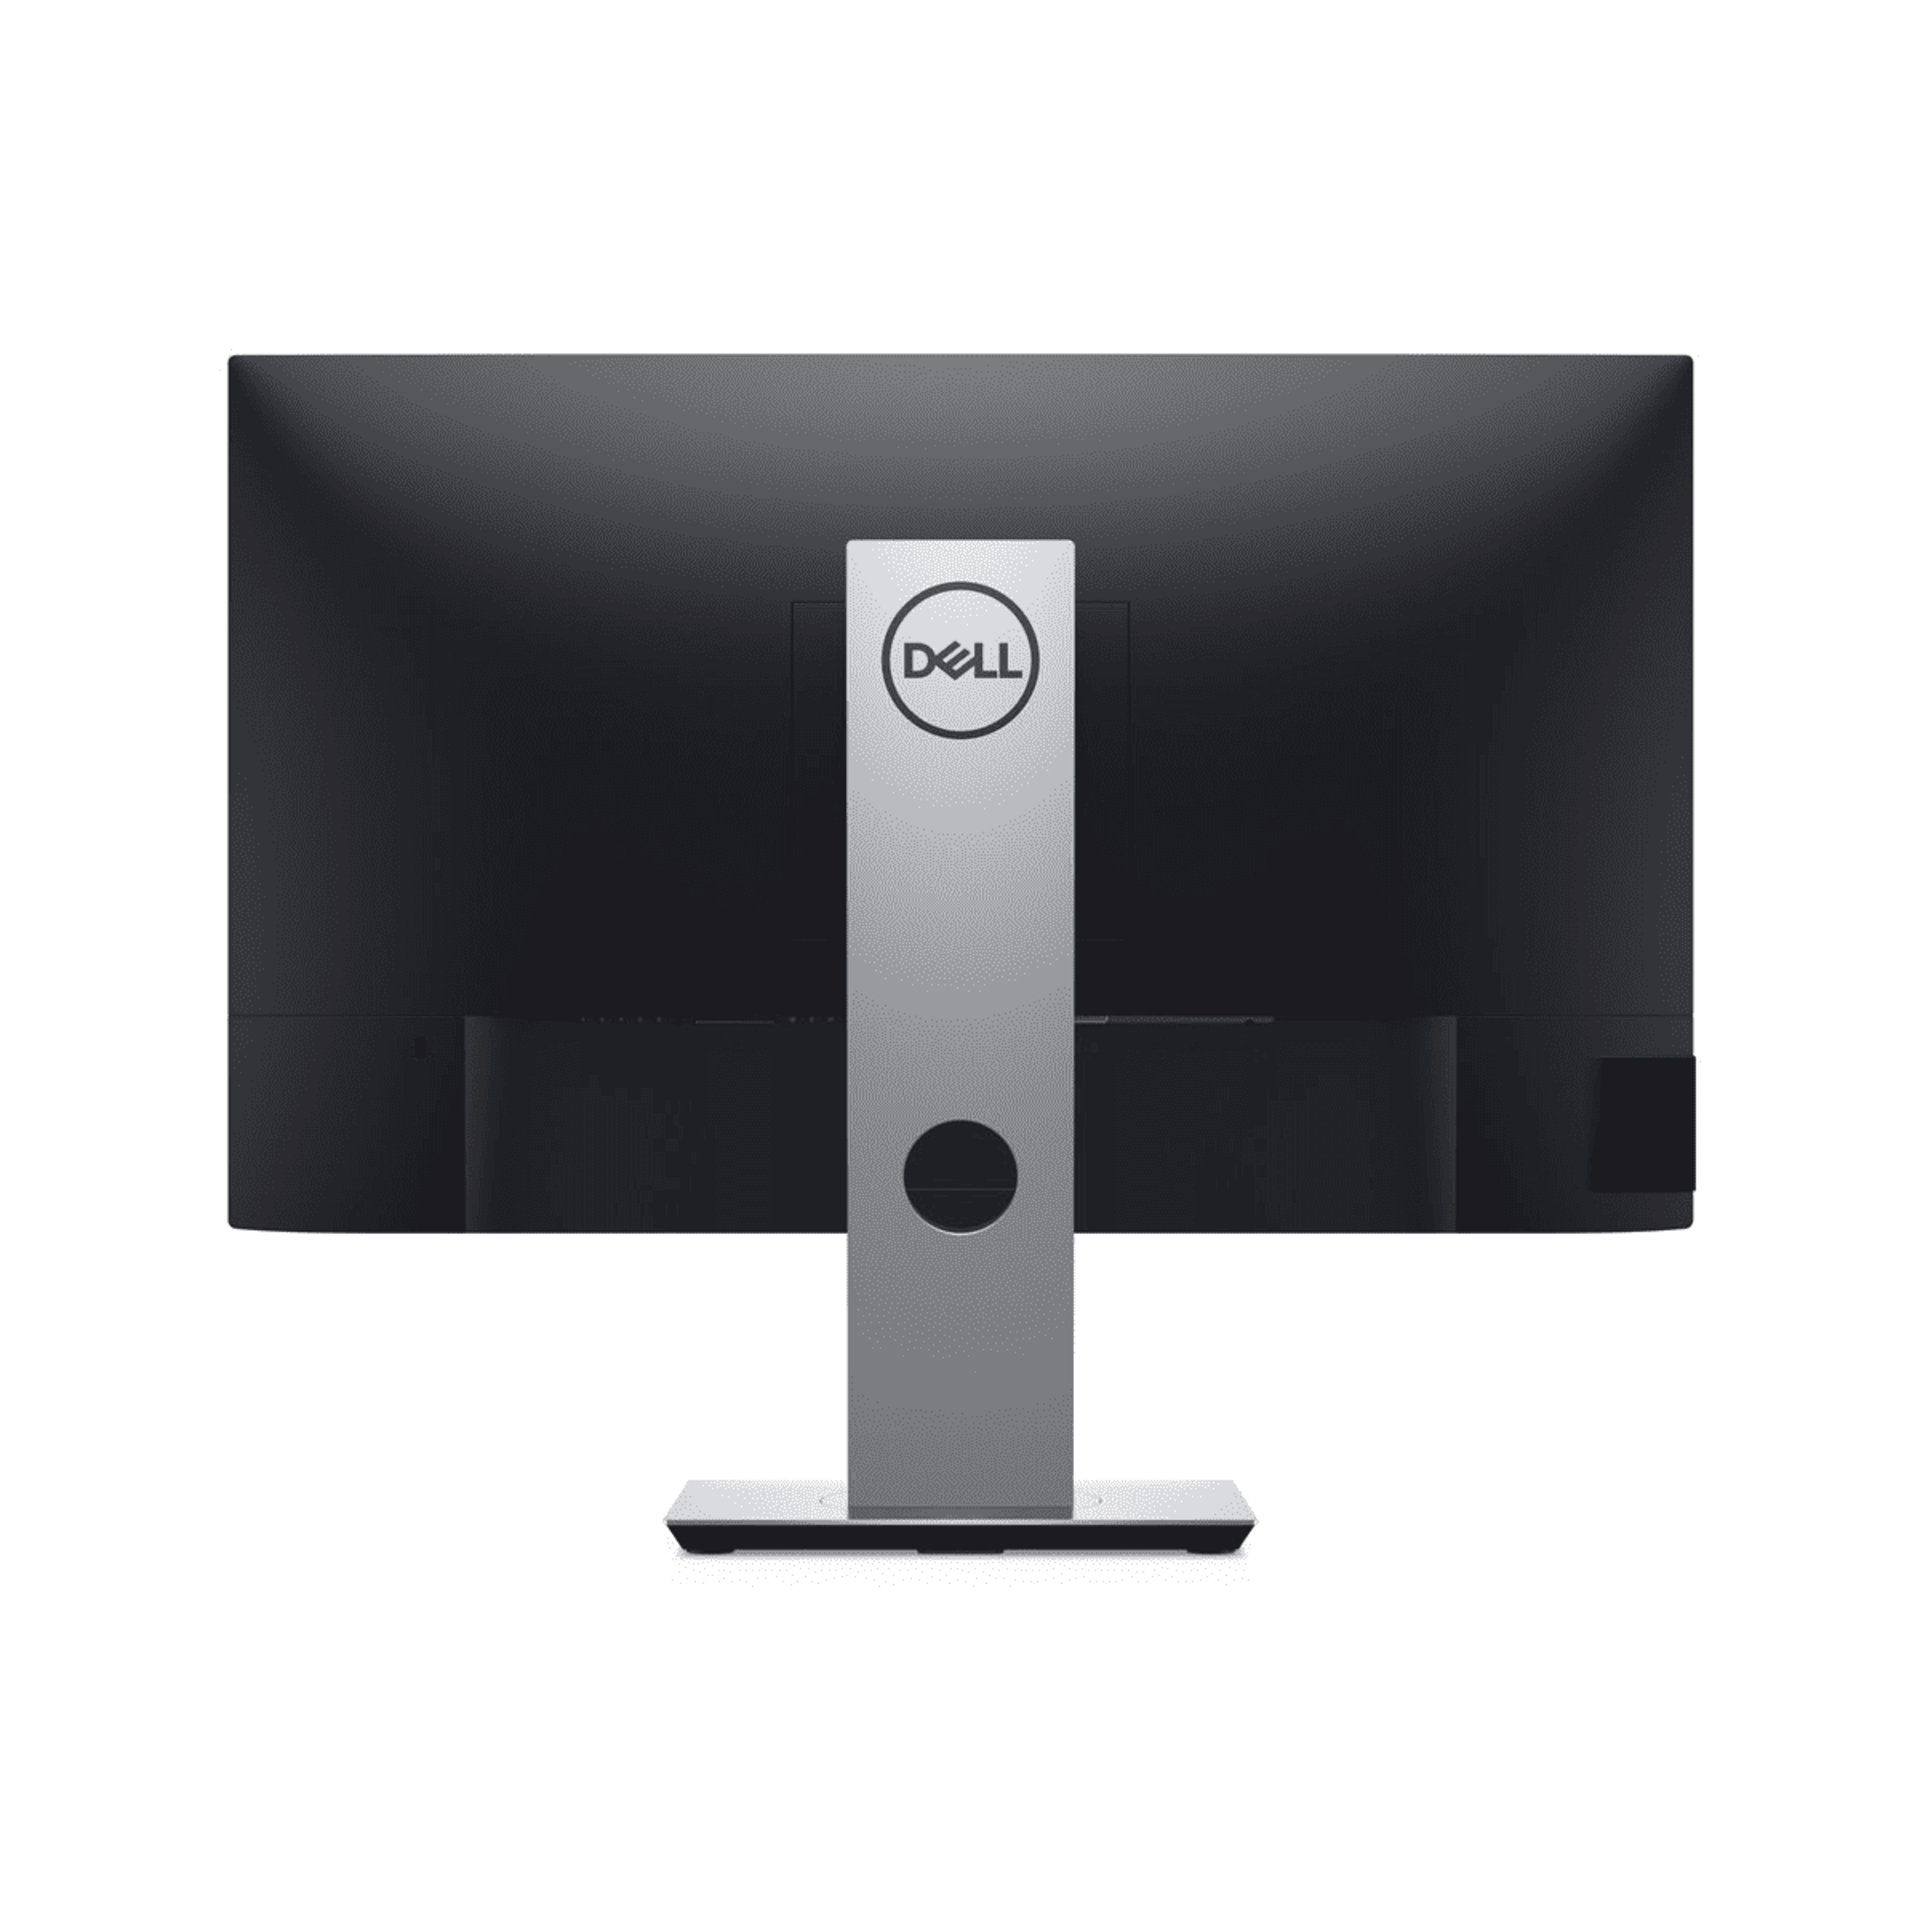 Dell Flat Panel Monitor P2419H Full HD LED IPS Monitor July 2019 - Image 4 of 4